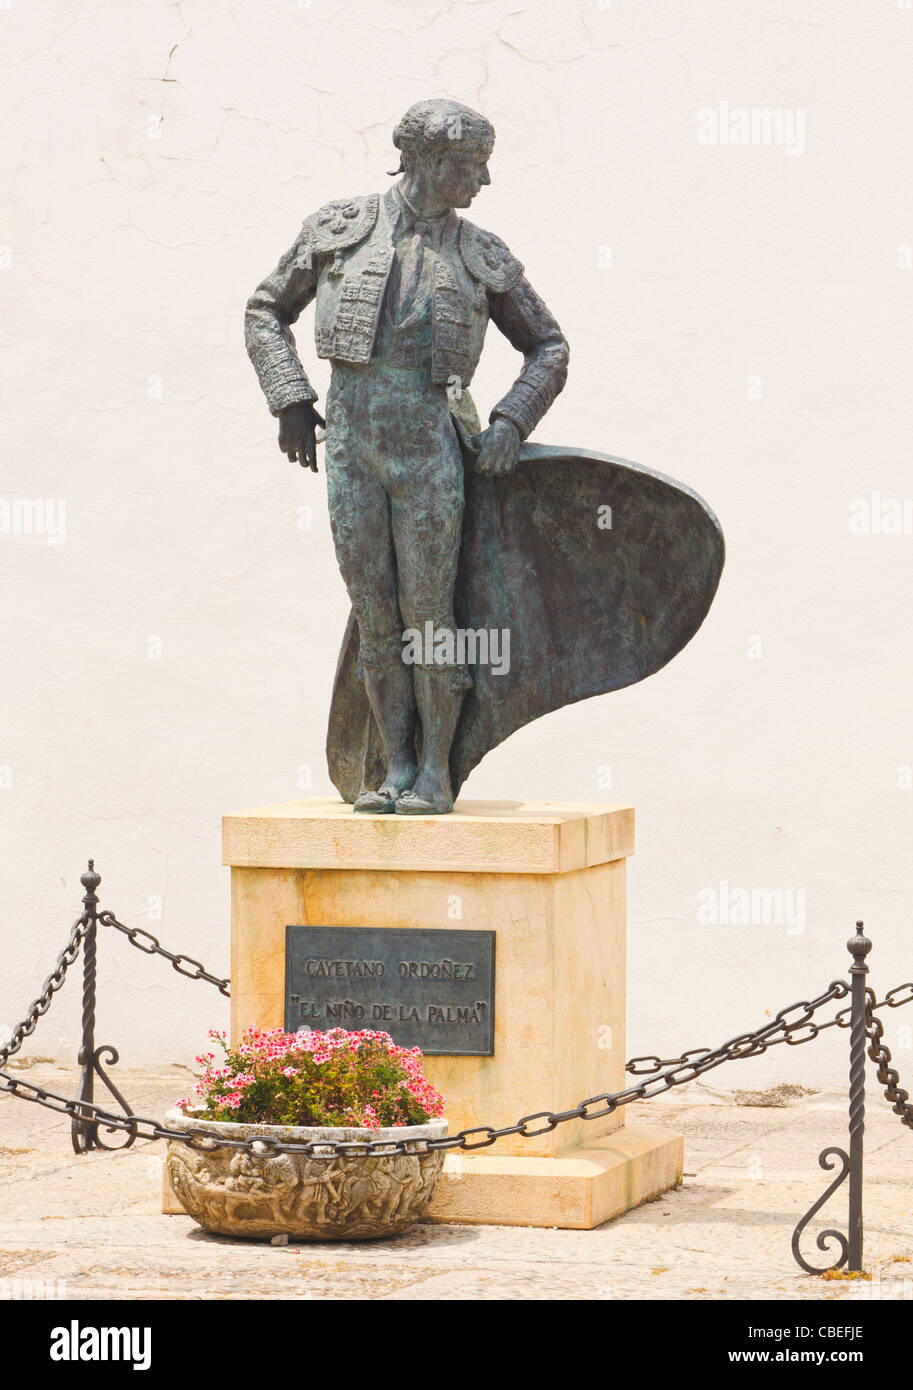 Ronda, Provinz Malaga, Spanien. Statue der Stierkämpfer Cayetano Ordóñez, El Niño De La Palma, 1904-1961, außerhalb Stierkampfarena Stockfoto